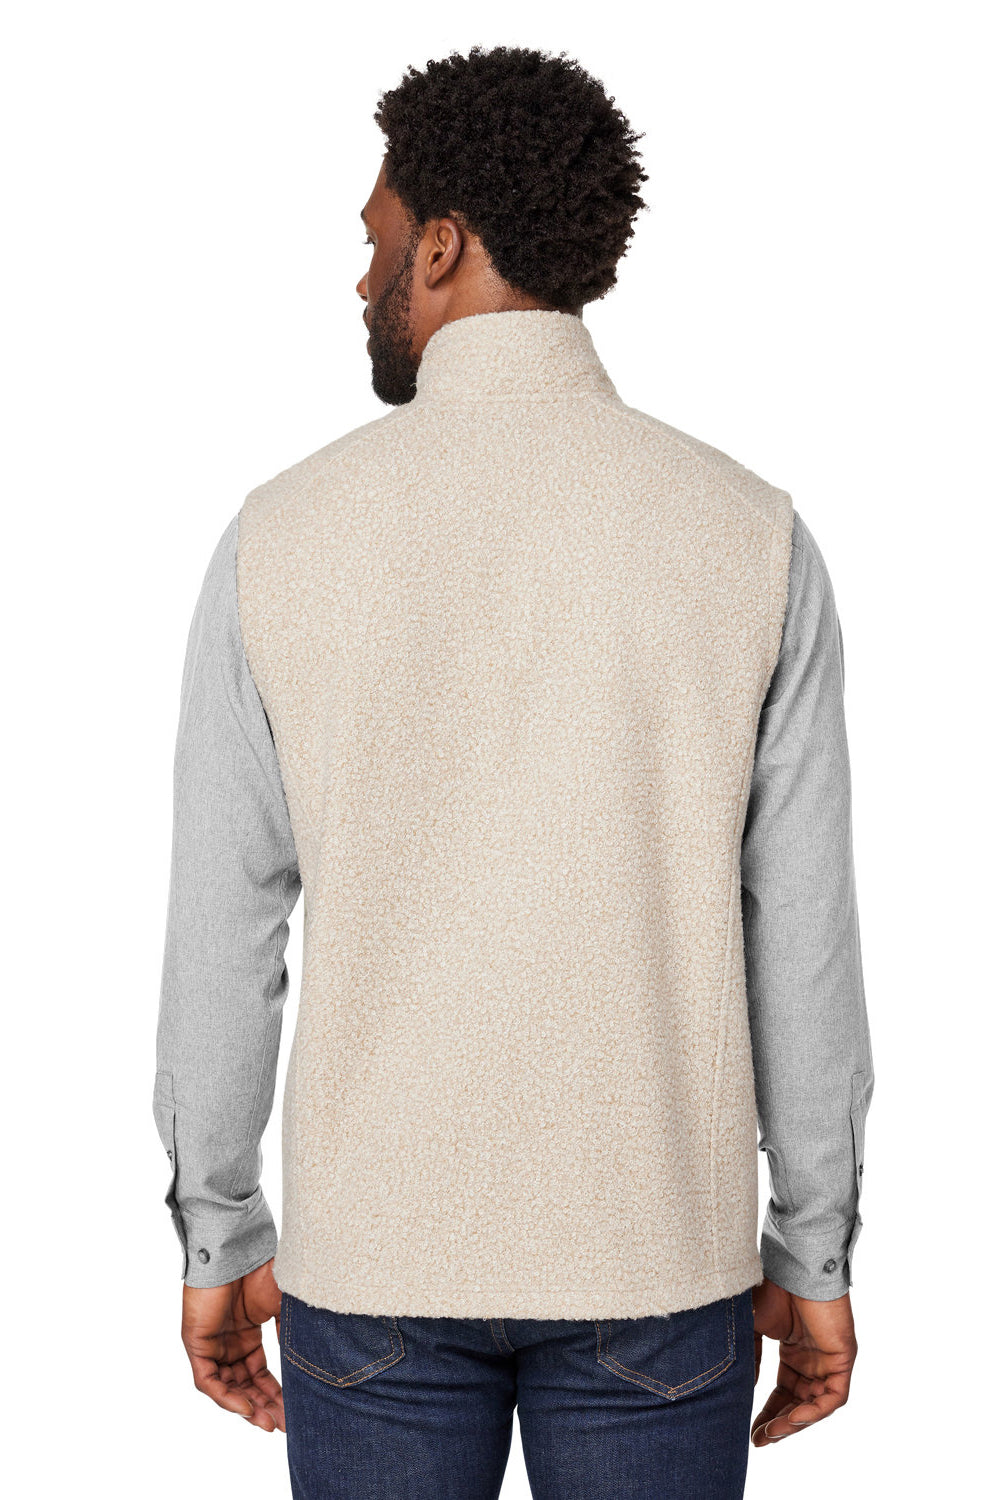 North End NE714 Mens Aura Sweater Fleece Full Zip Vest Heather Oatmeal/Teak Back